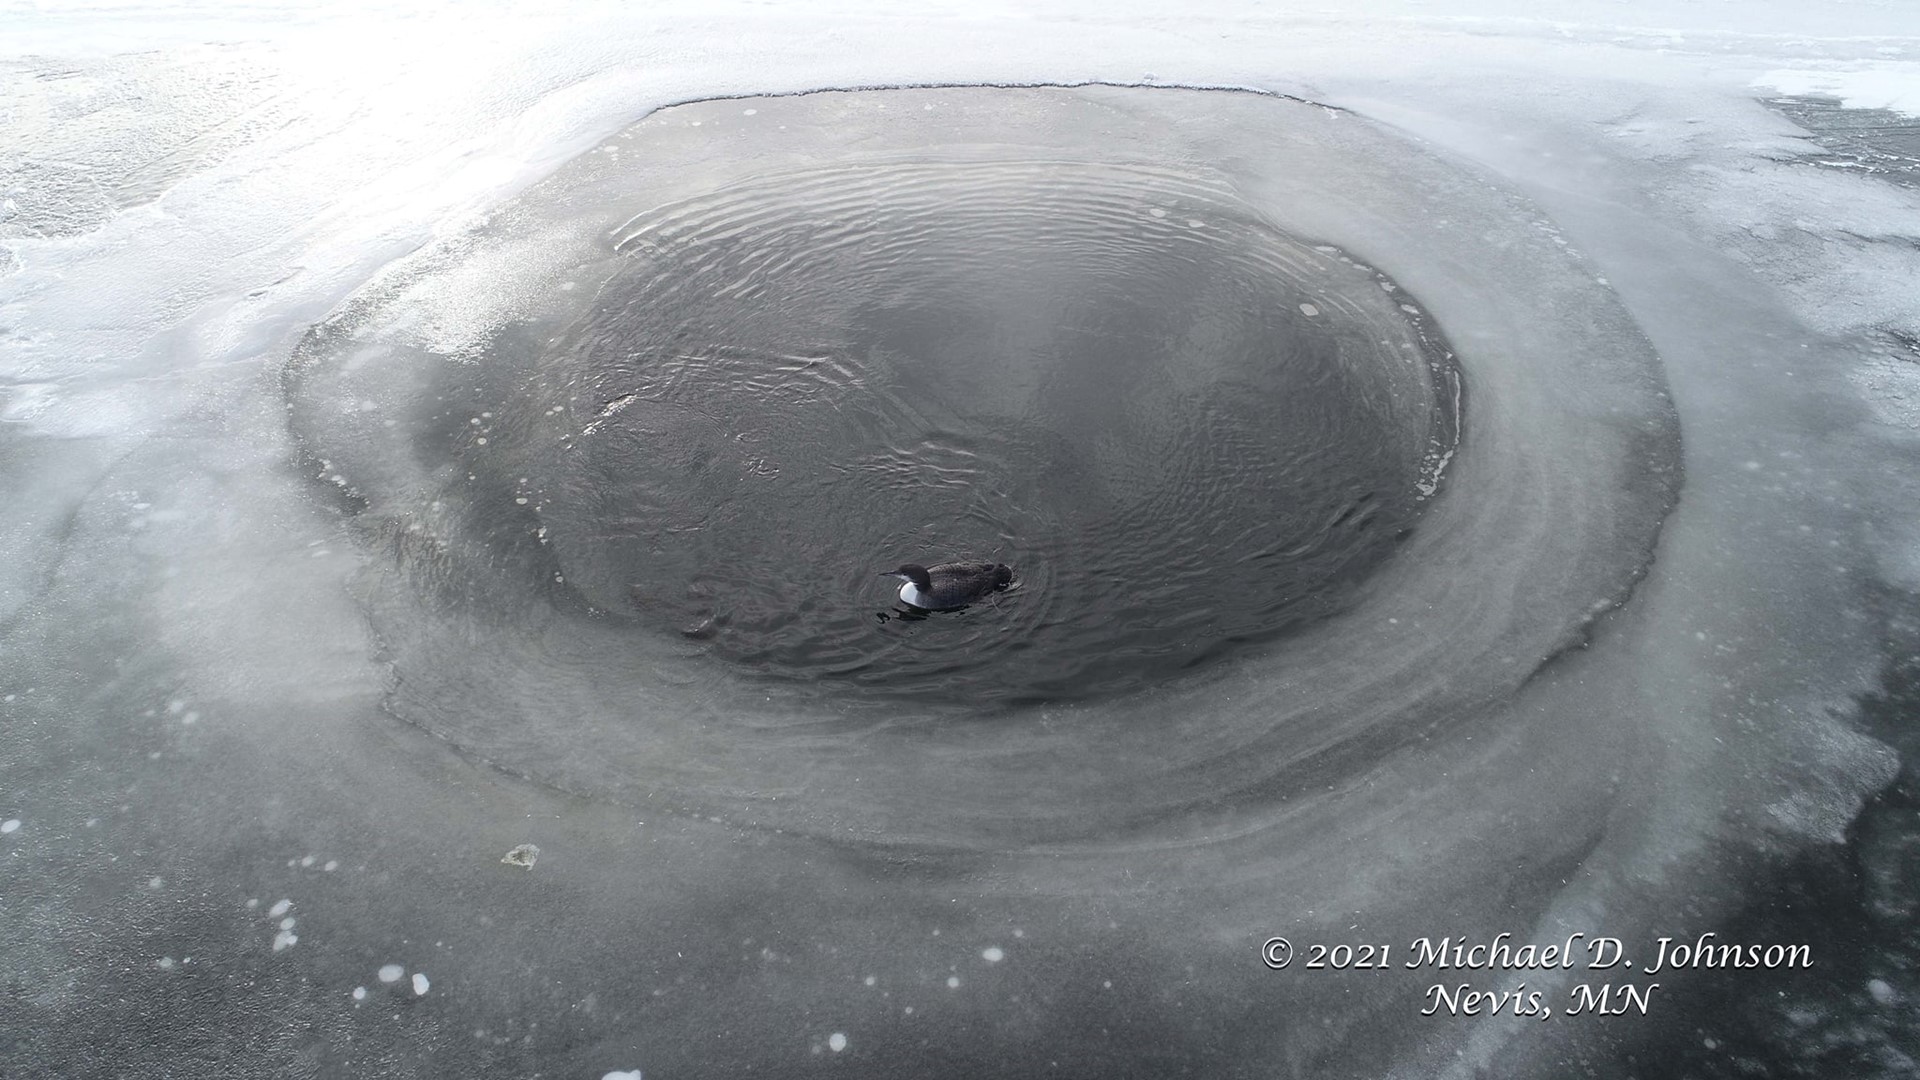 There's a loon stuck in a hole of a yet-to-be-frozen lake in Nevis, Minnesota.